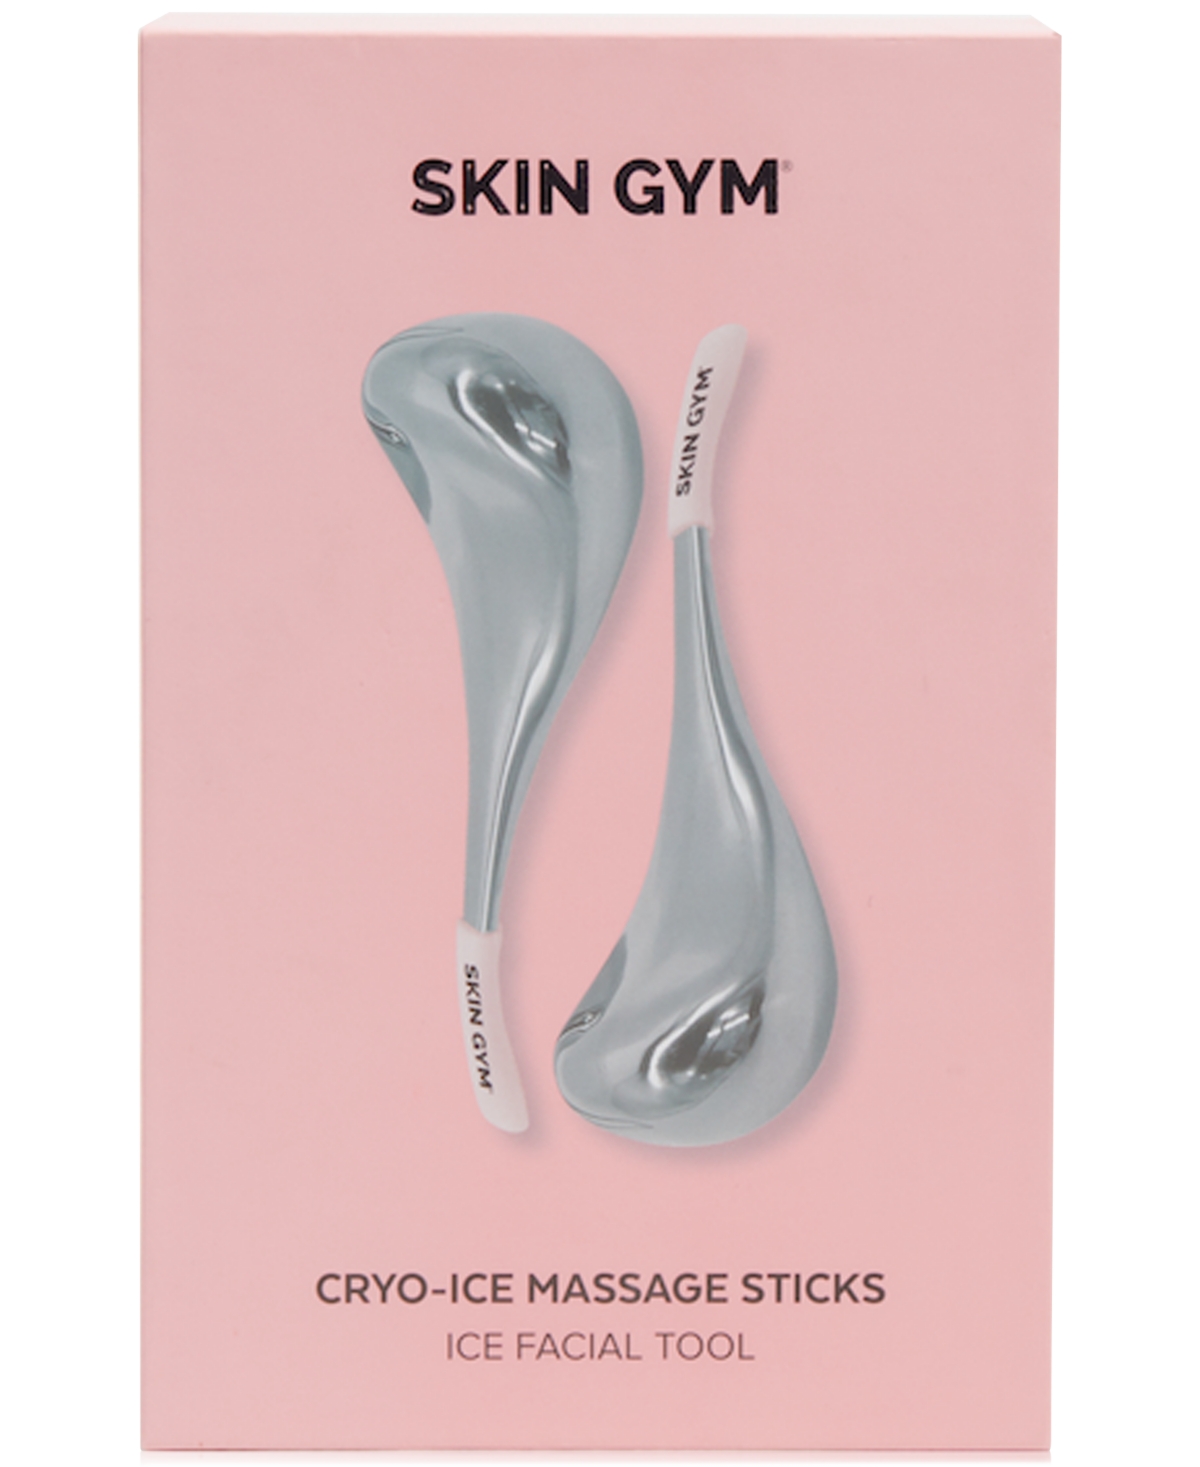 Cryo-Ice Massage Sticks